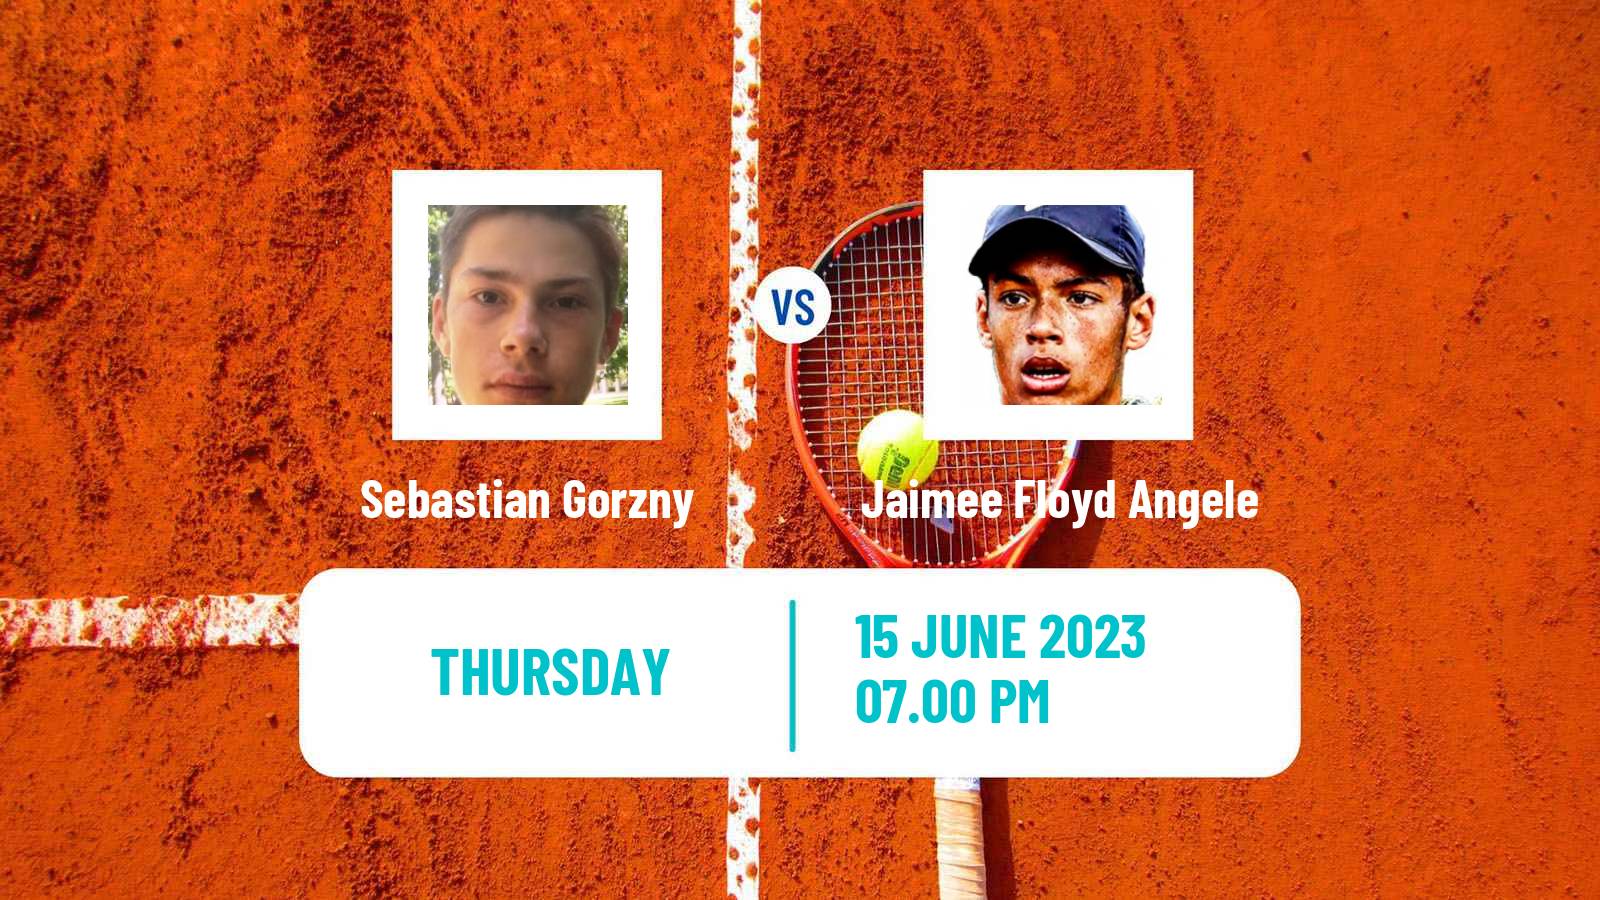 Tennis ITF M25 Wichita Ks Men Sebastian Gorzny - Jaimee Floyd Angele